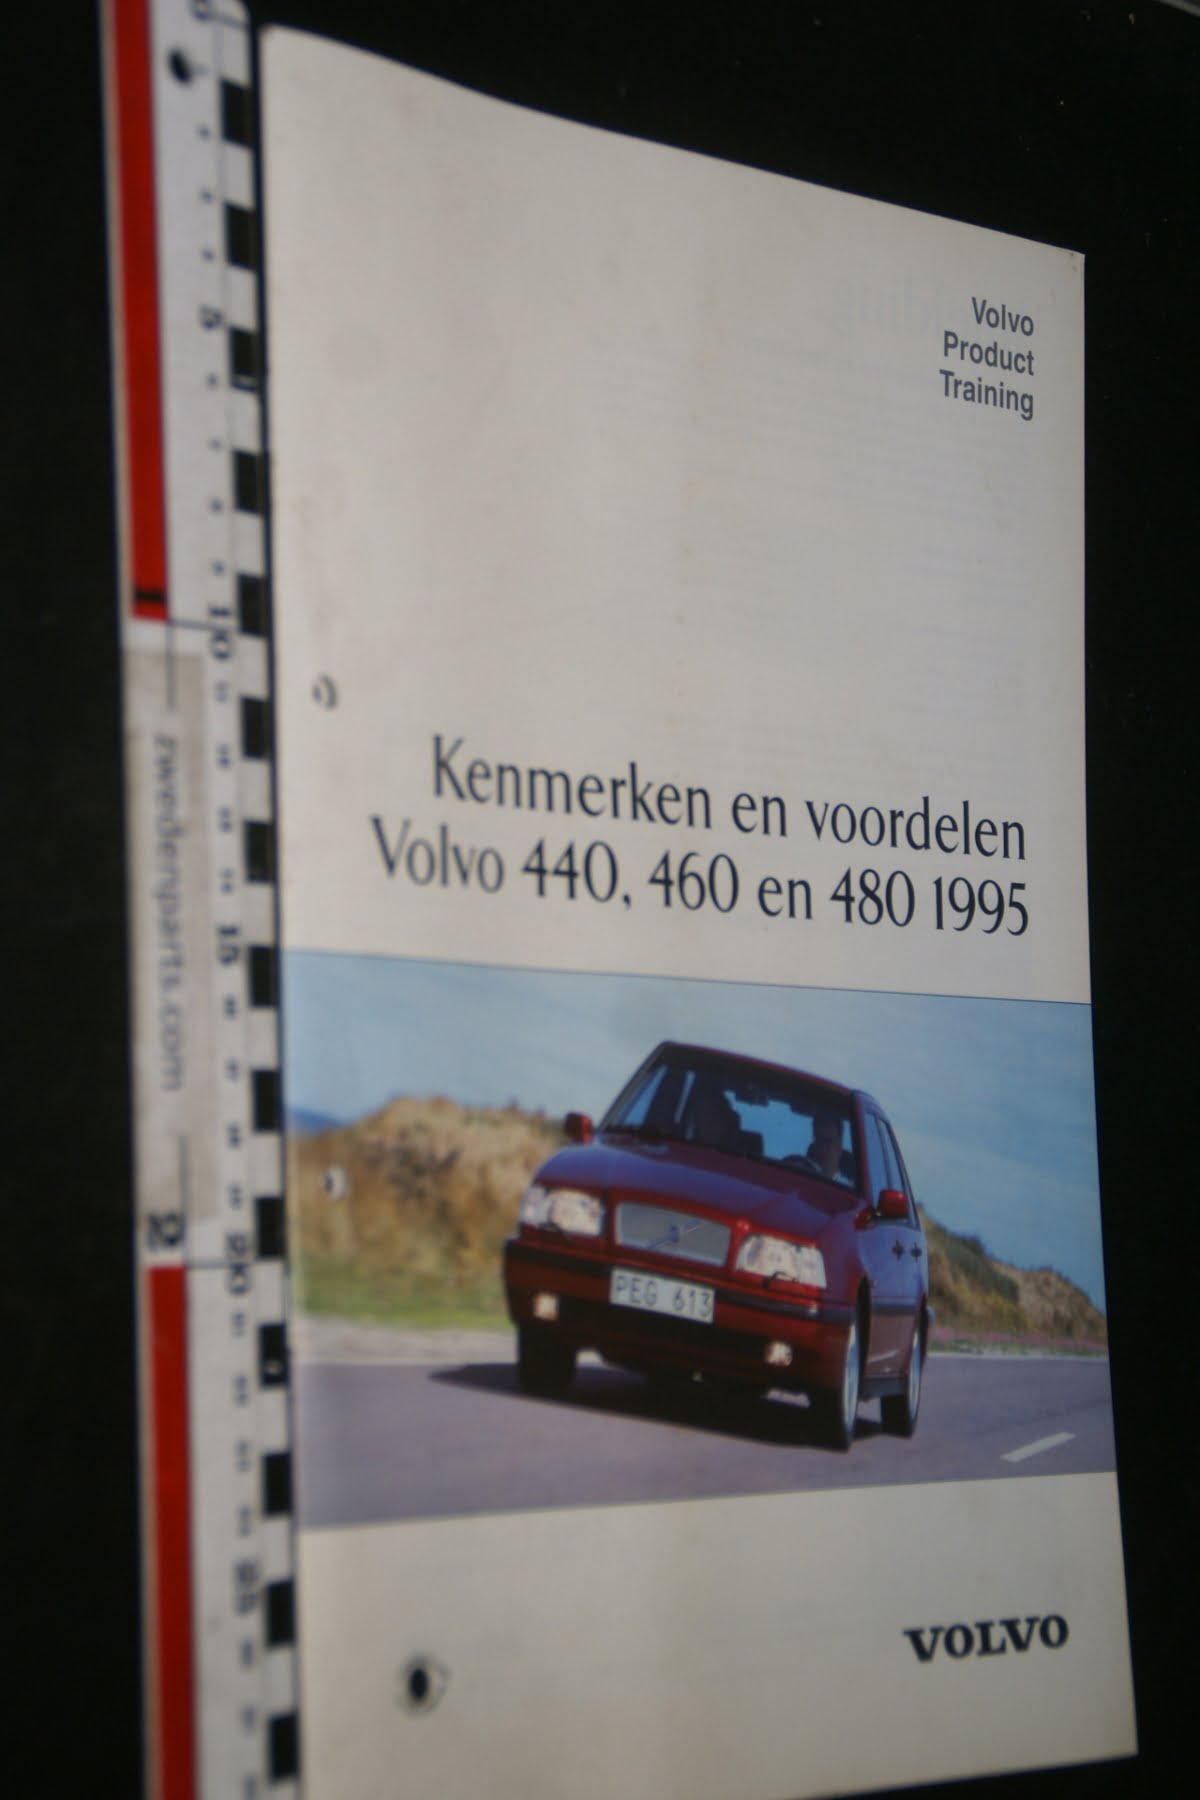 DSC02945 1995 brochure origineel Volvo Product Training 440, 460 en 480 kenmerken en voordelen nr PV 523-31400-2ab5b73c